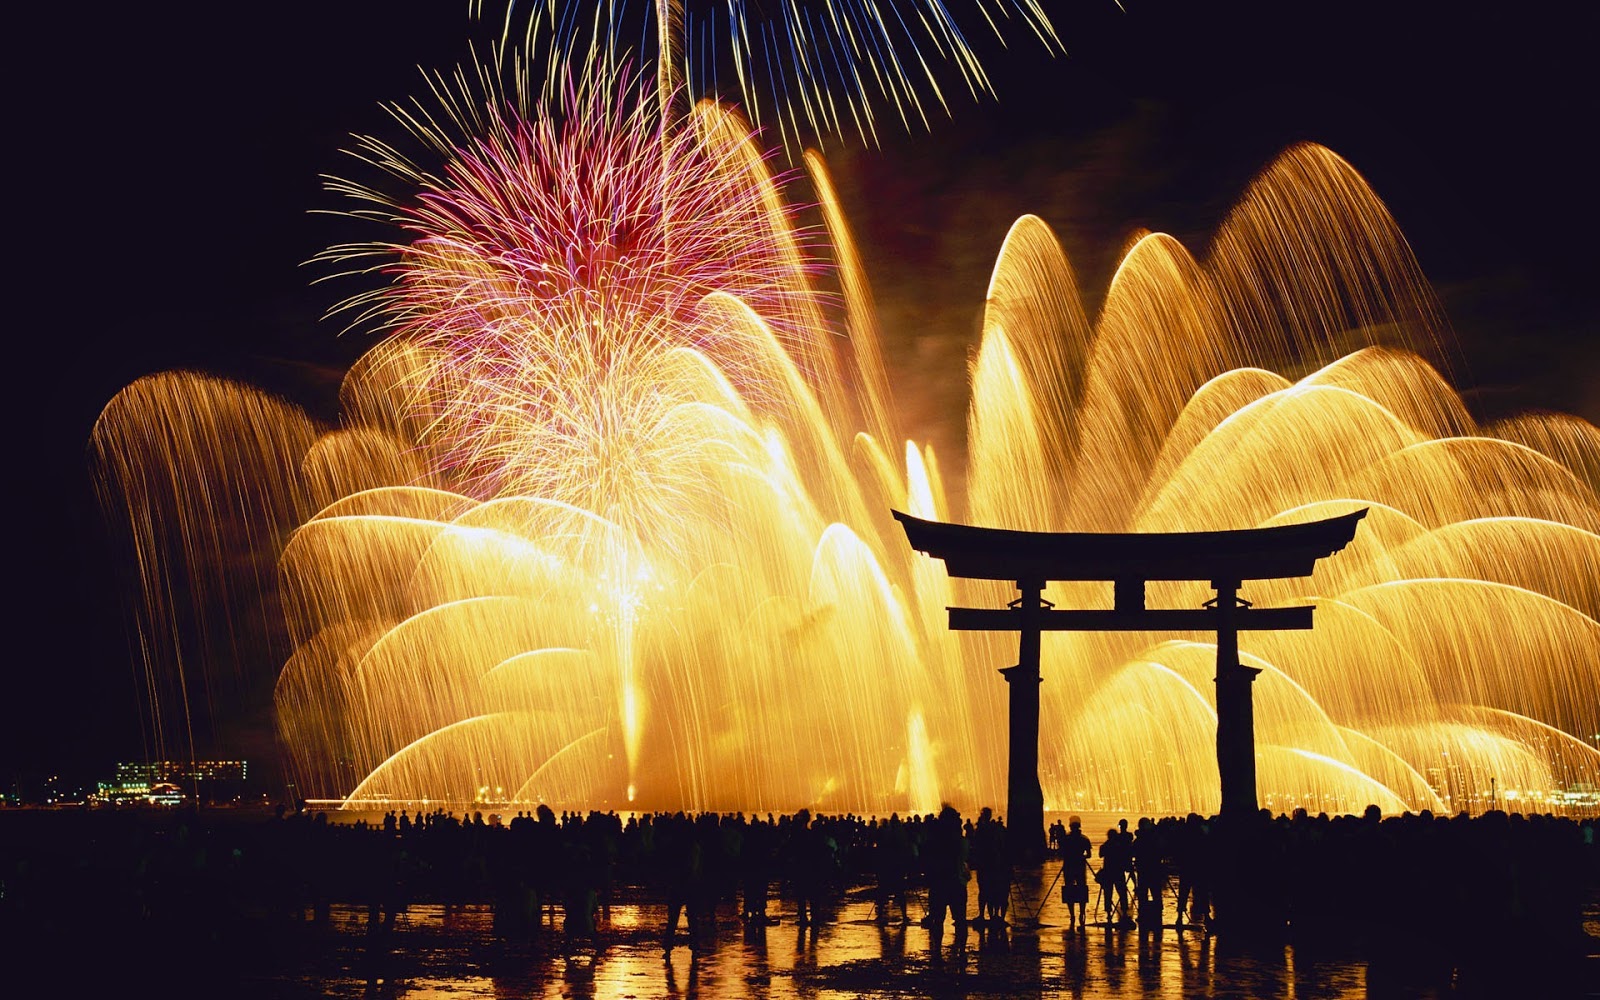 About Teganuma Fireworks in Japan 2